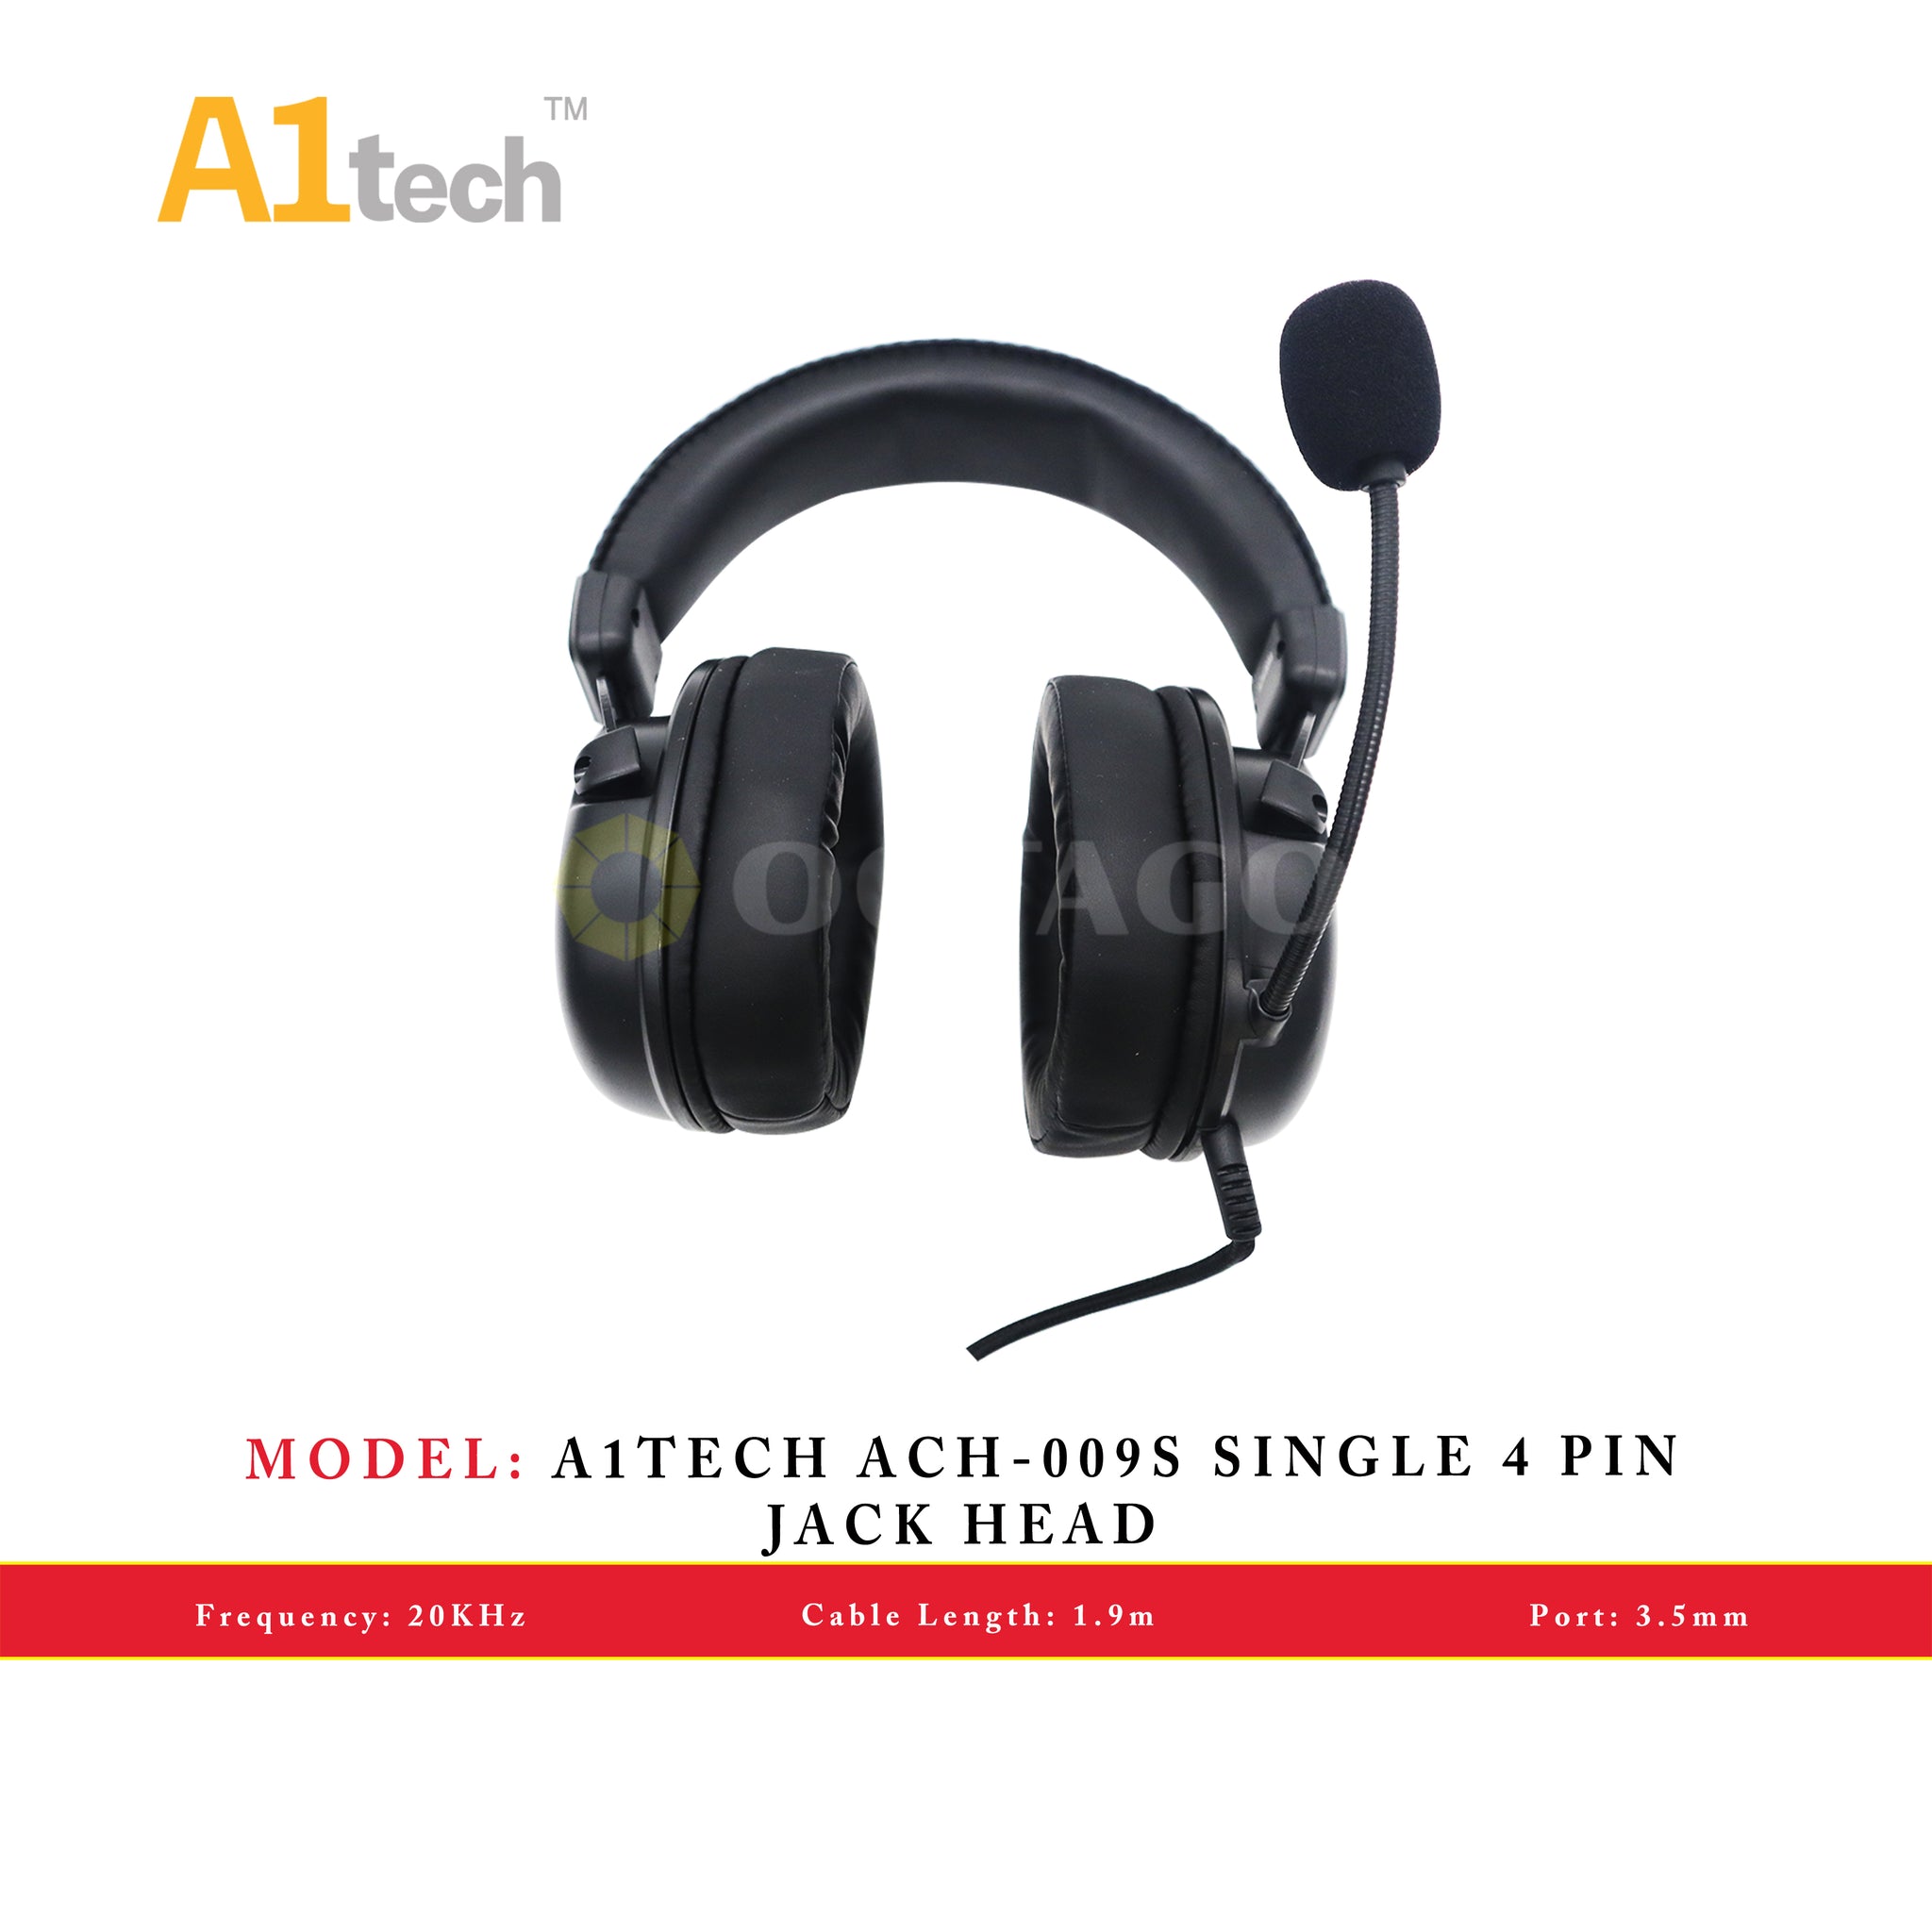 A1TECH ACH-009S SINGLE 4 PIN JACK HEAD